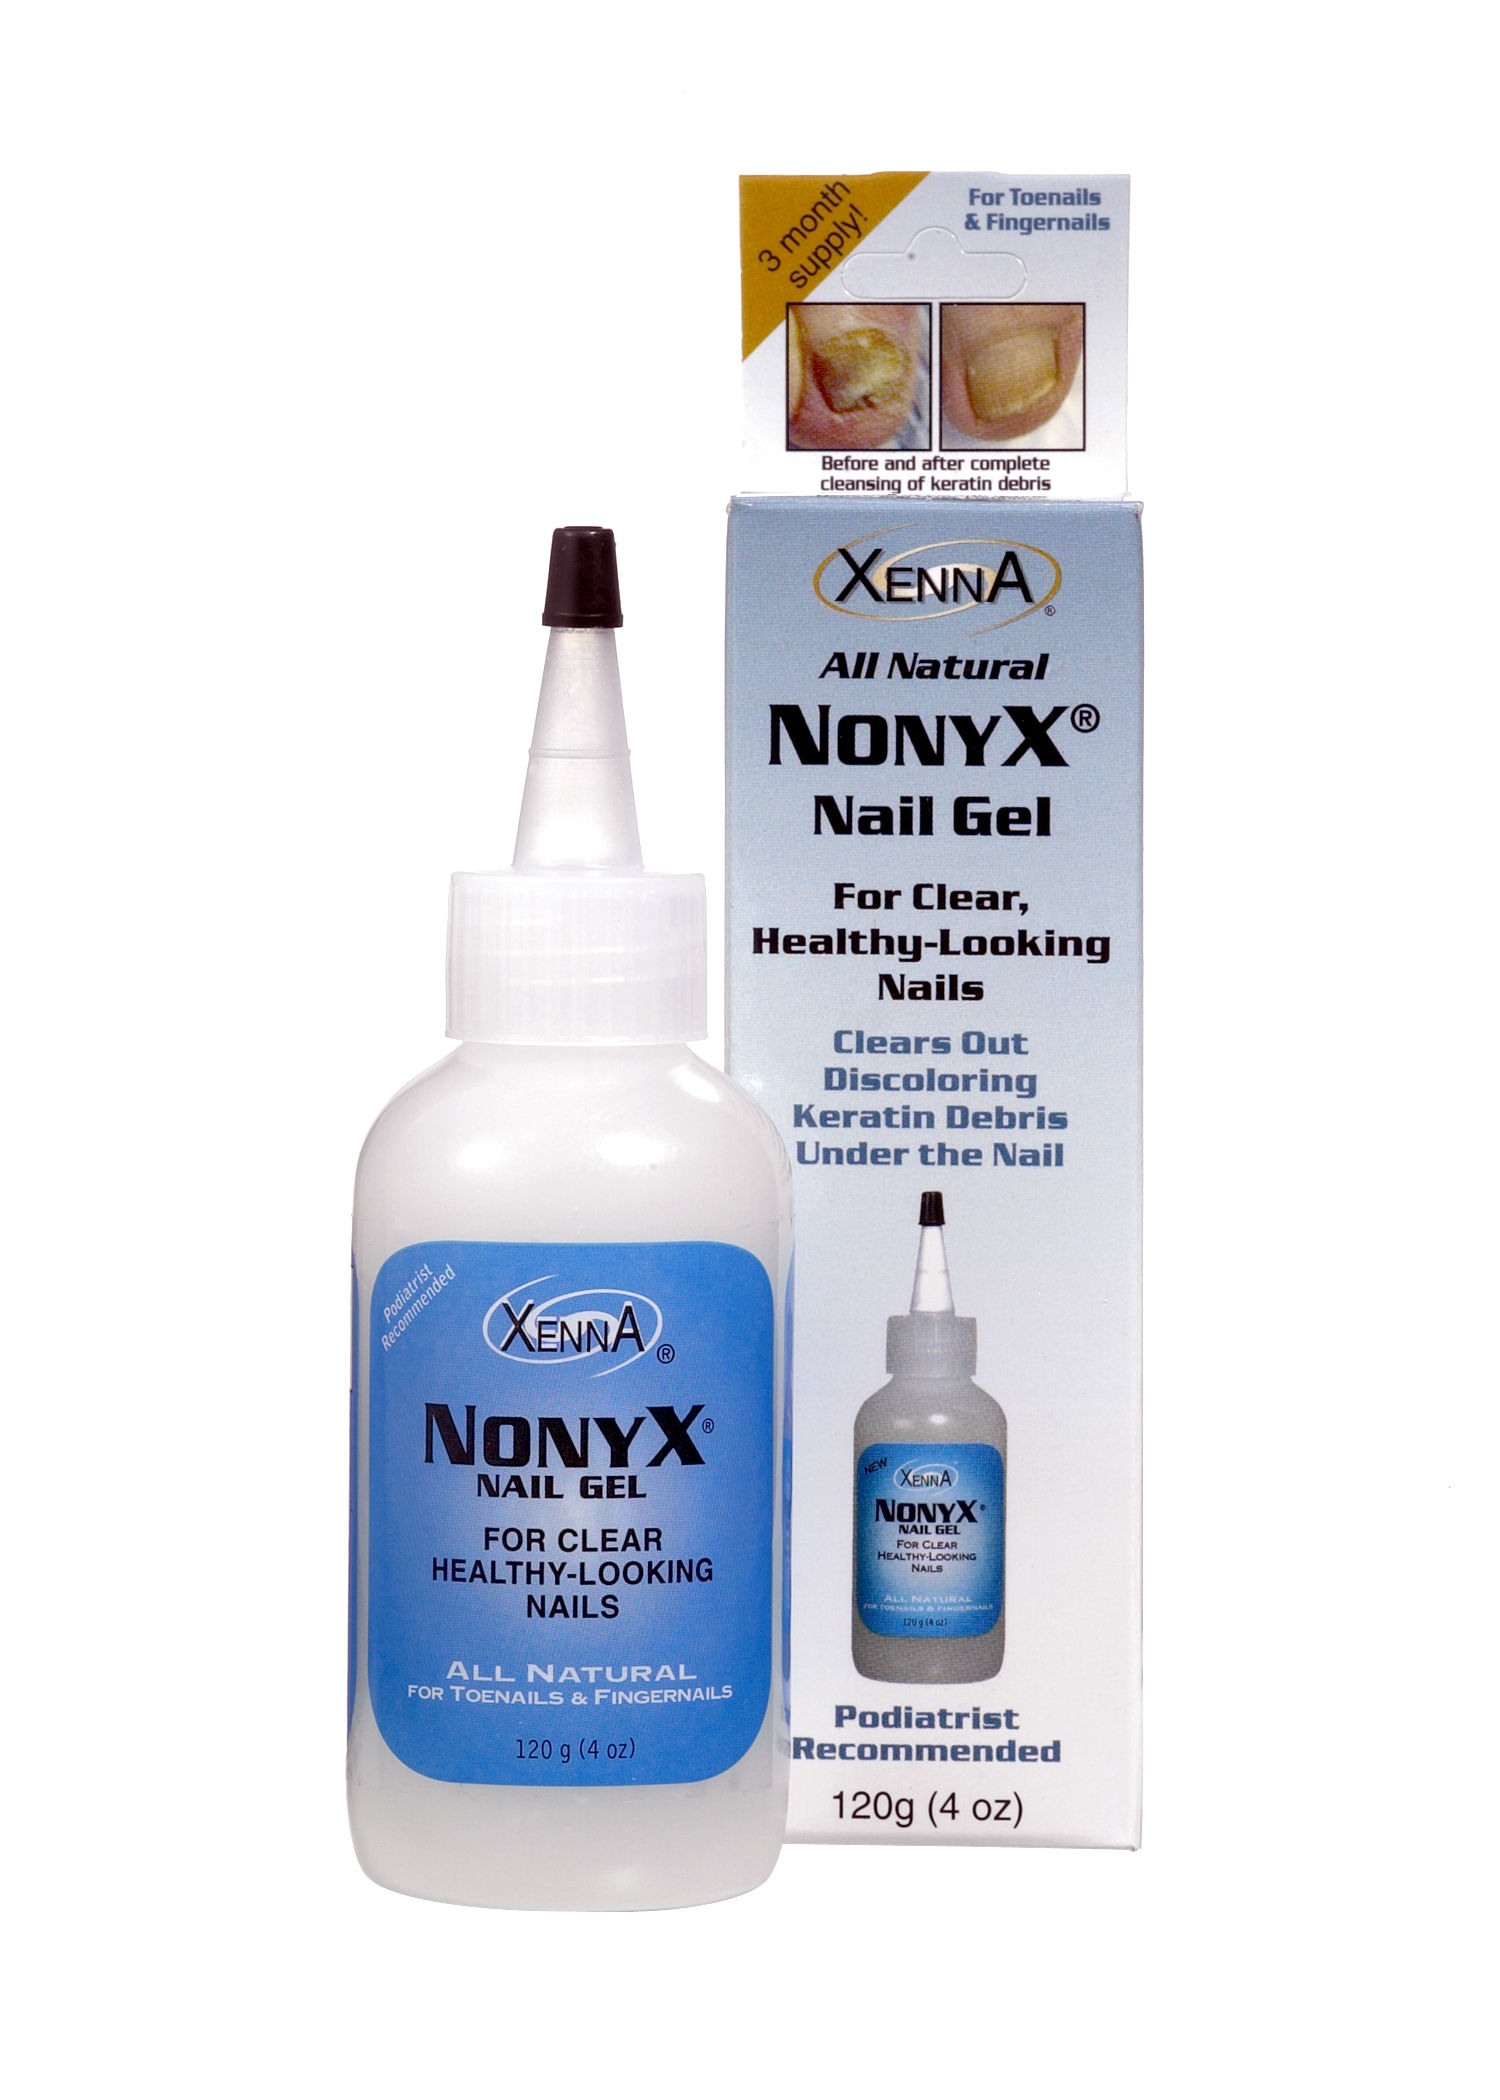 nonyx-nail-gel-a-toenail-fungus-treatment-that-clears-out-fungus-by